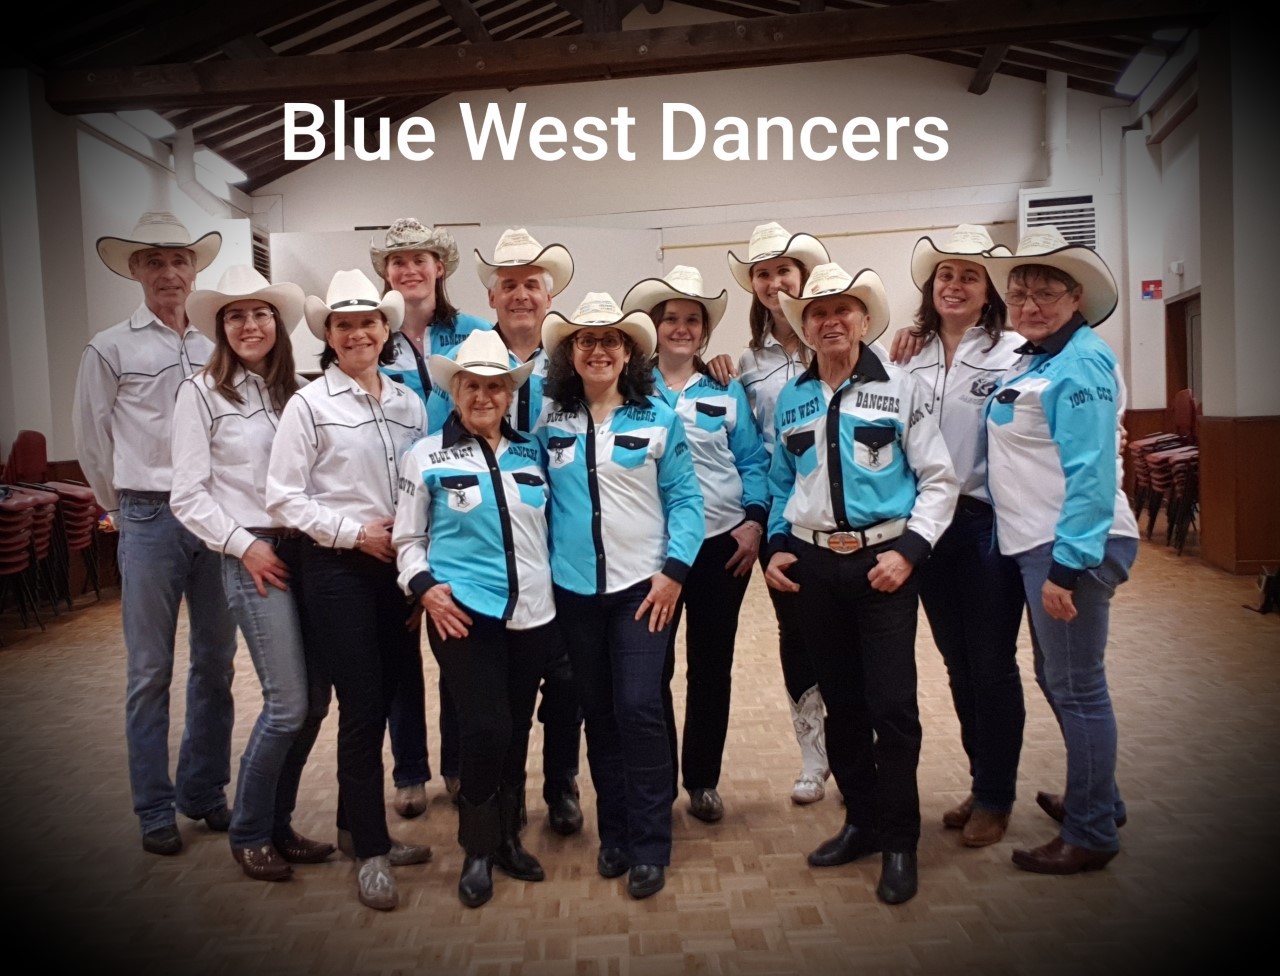 Blue west dancers team